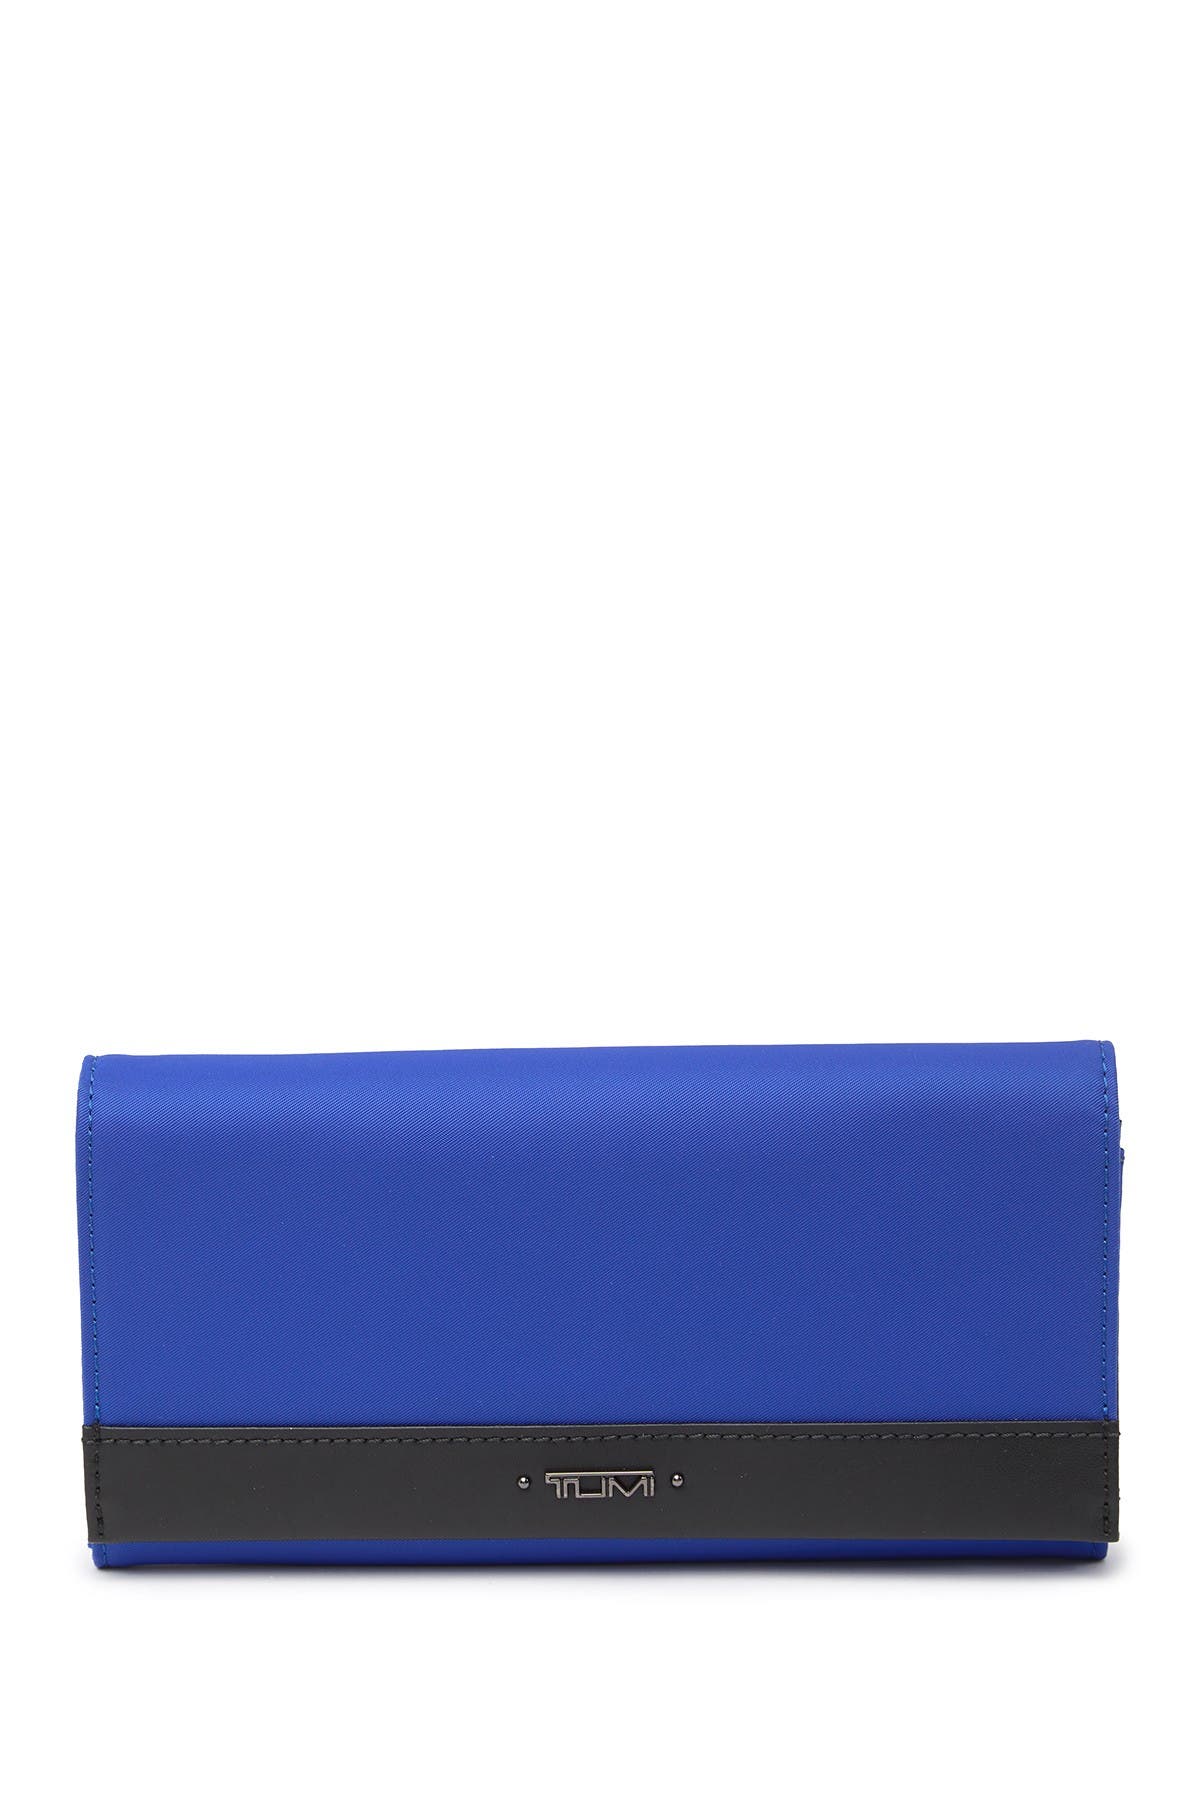 Tumi Continental Flap Wallet In Light/pastel Blue1